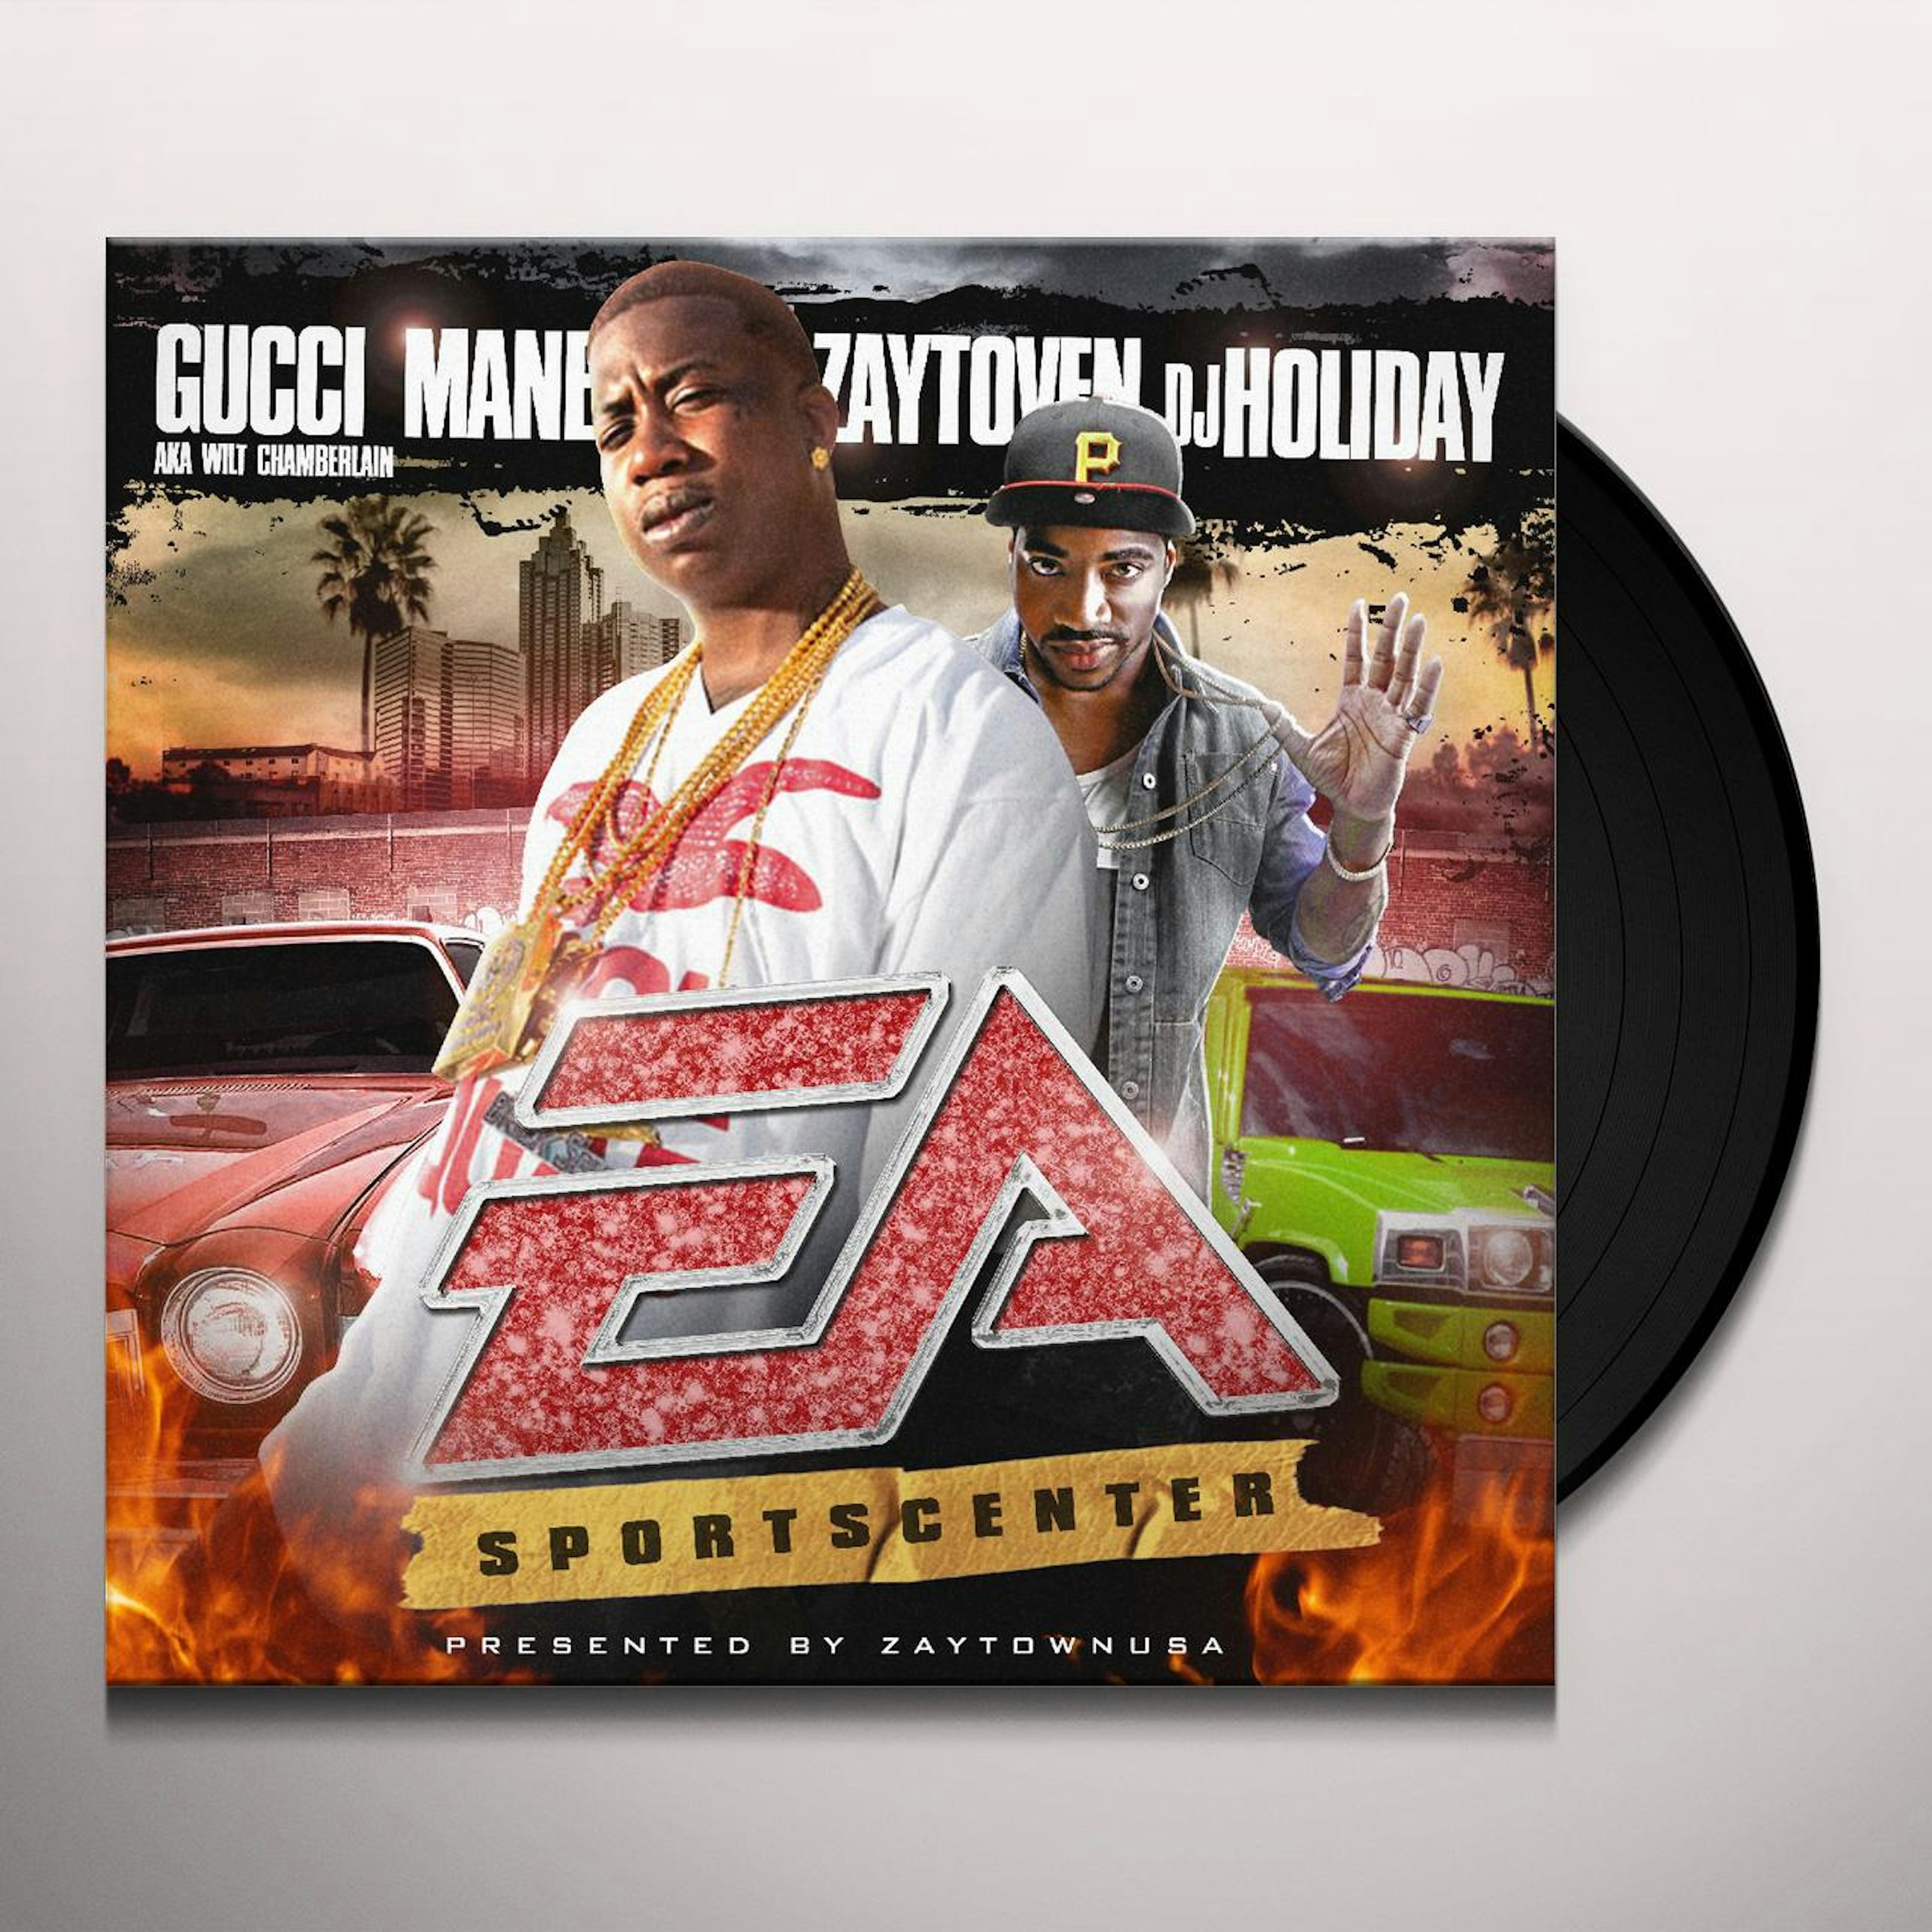 Gucci Mane / Zaytoven EA SPORTSCENTER Vinyl Record